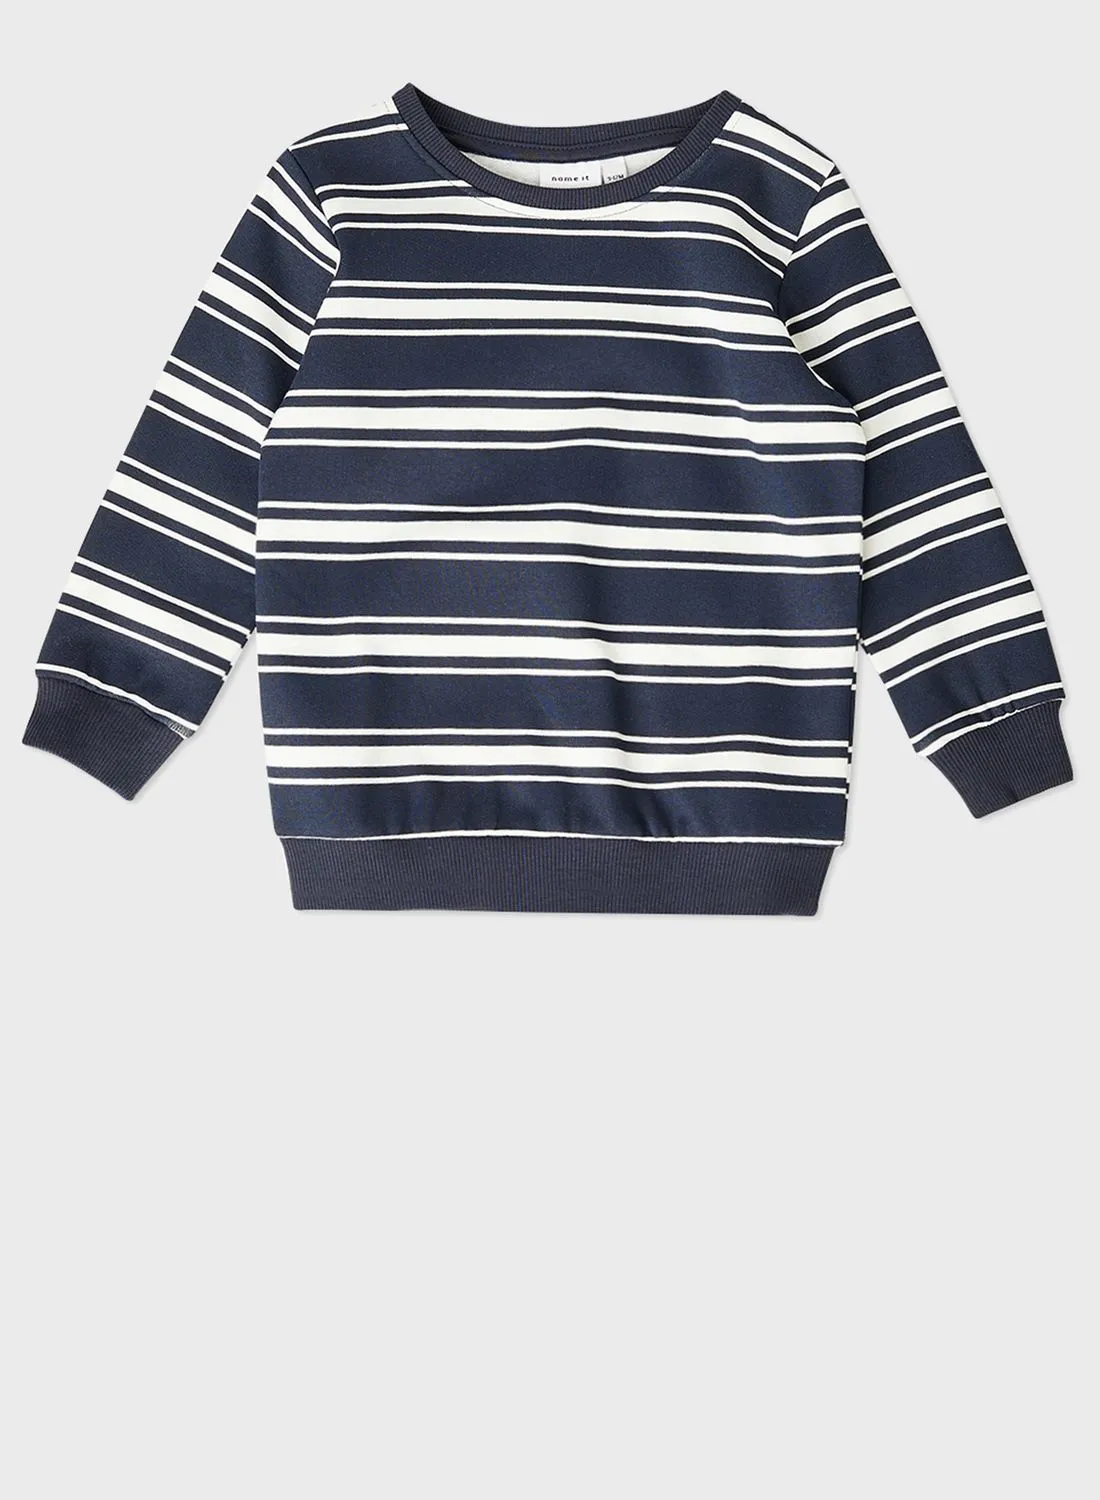 NAME IT Kids Striped Sweatshirt